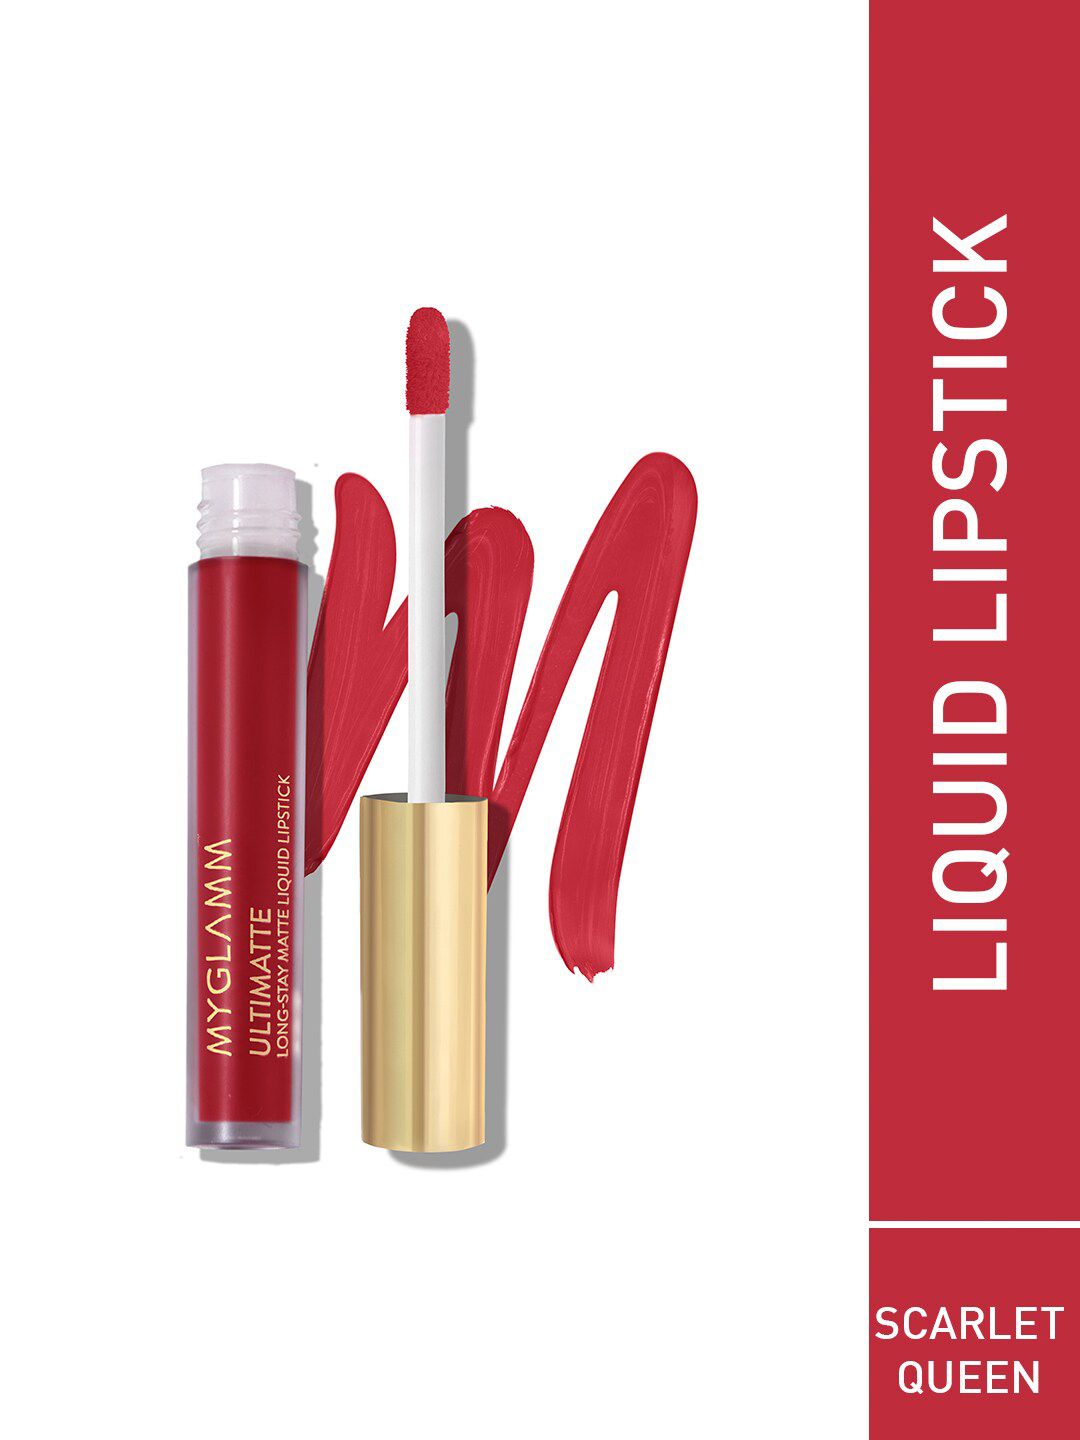 MyGlamm Ultimatte Long Stay Matte Liquid Lipstick-Scarlet Queen-2.5ml Price in India